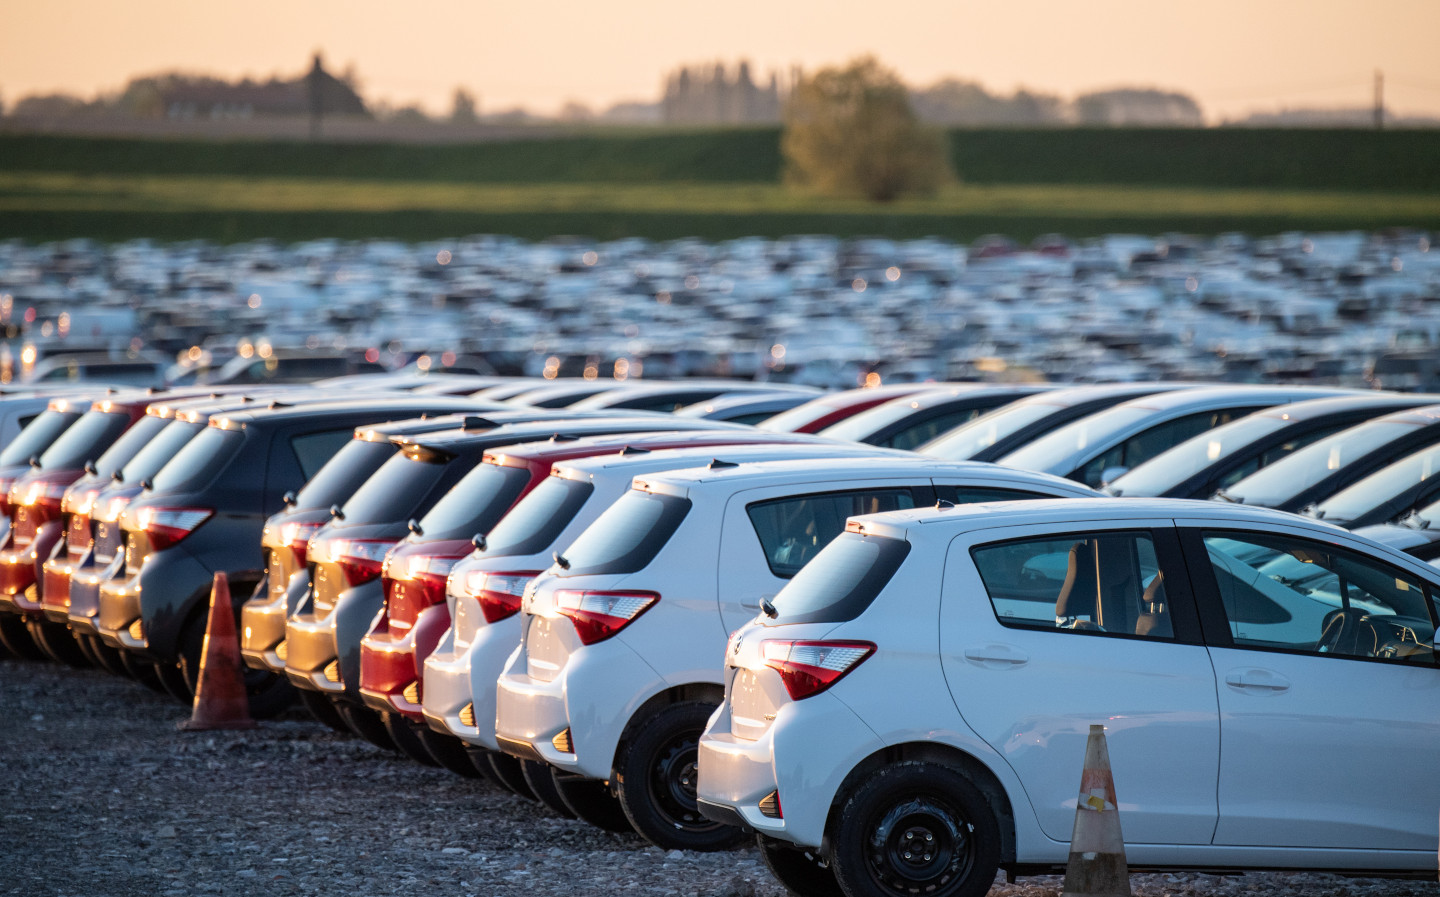 Toyota has sold 15m hybrids